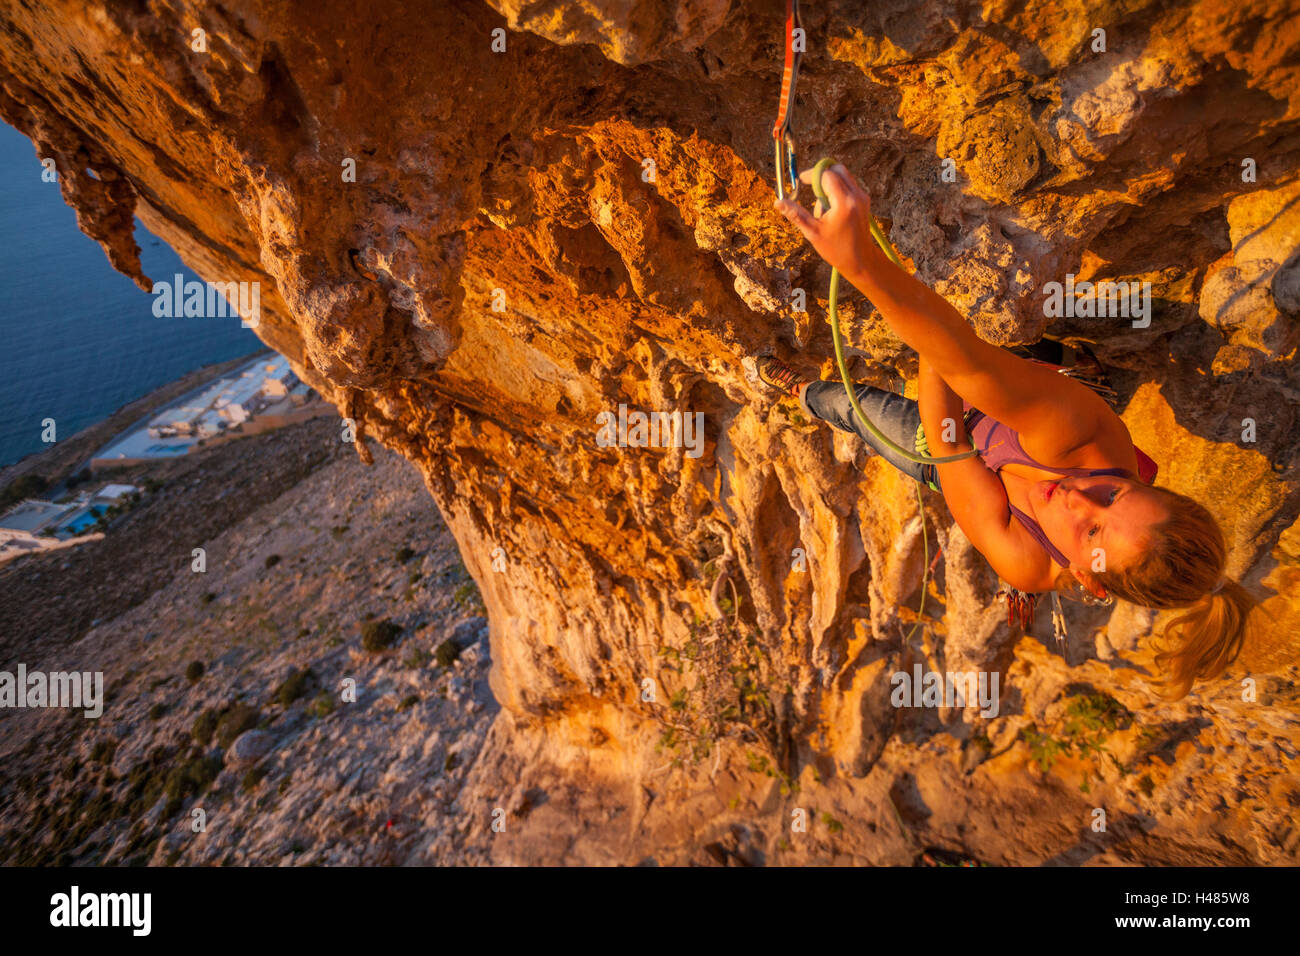 Aleksandra Ola Taistra, polish rock climbing athlete scaling the 7c route in Grande Grotta sector in Kalymnos island, Greece Stock Photo